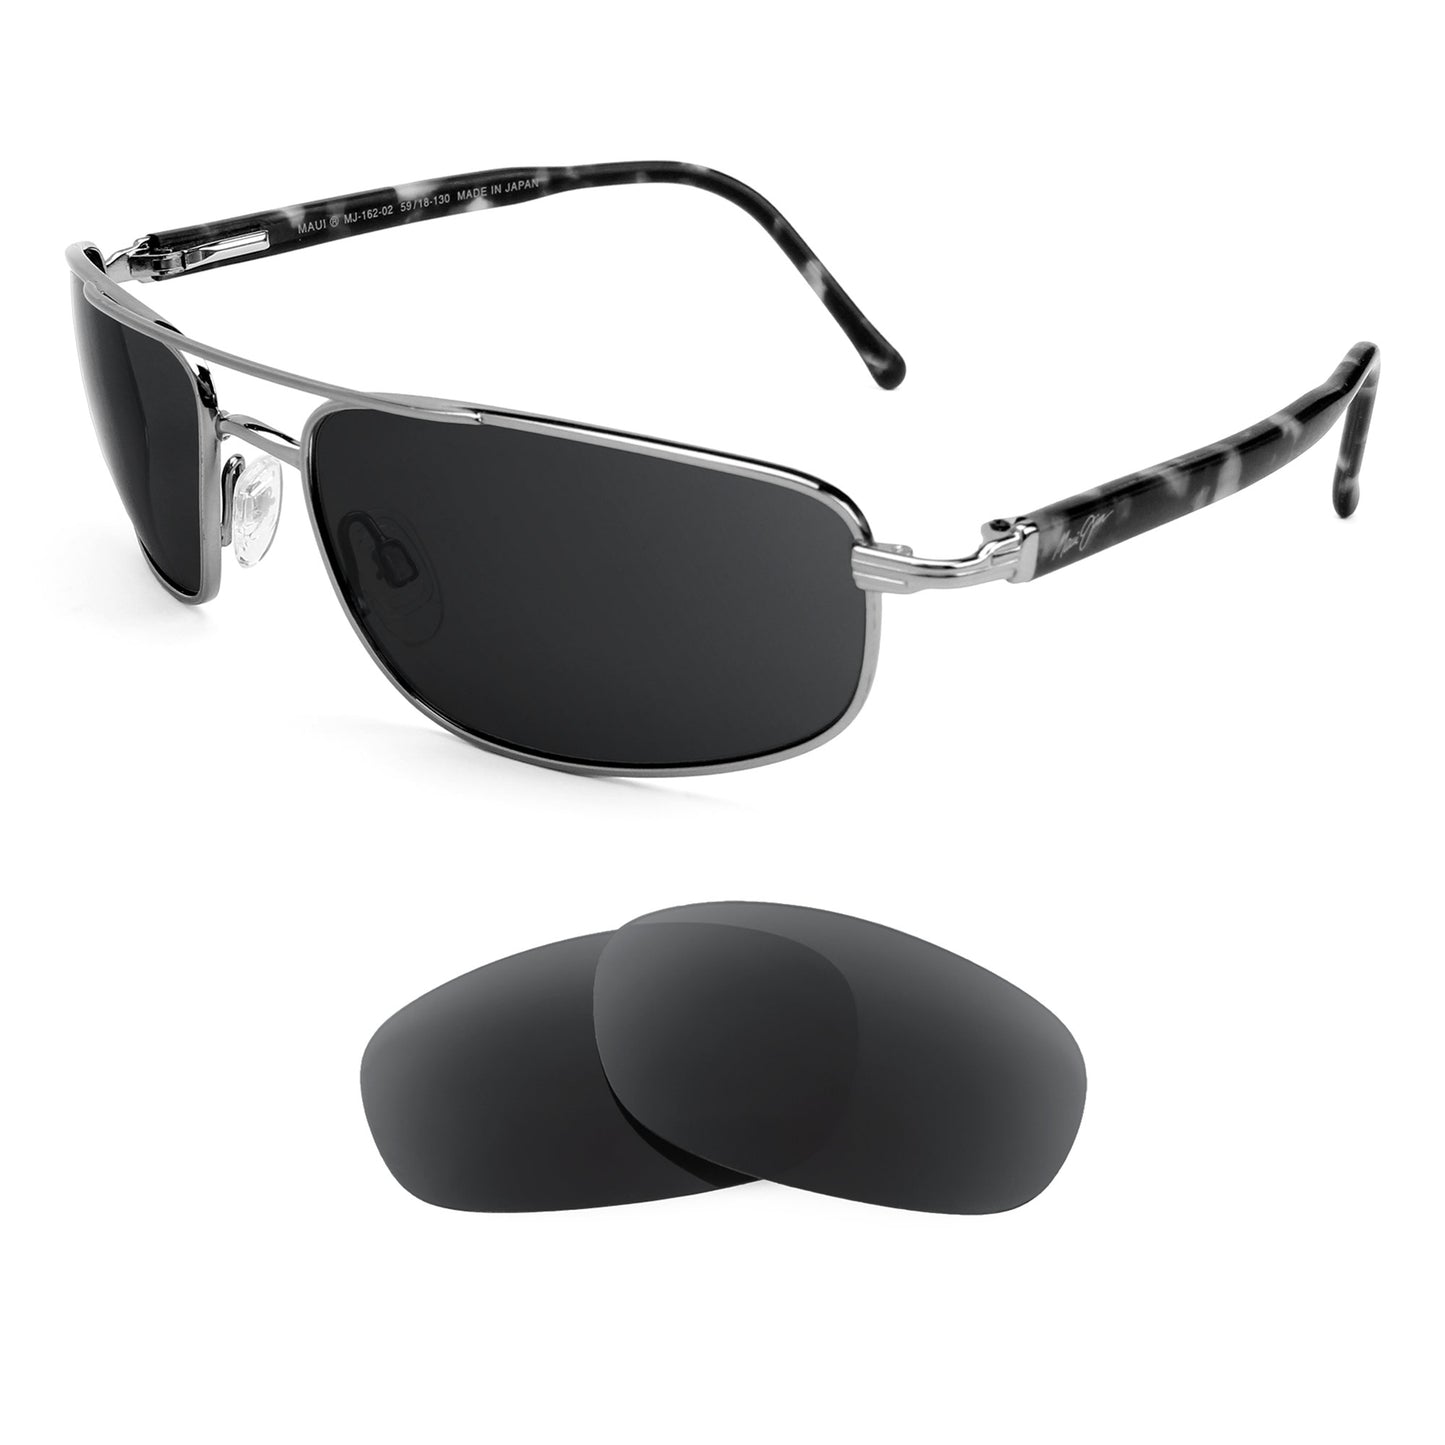 Maui Jim Kahuna MJ162 sunglasses with replacement lenses